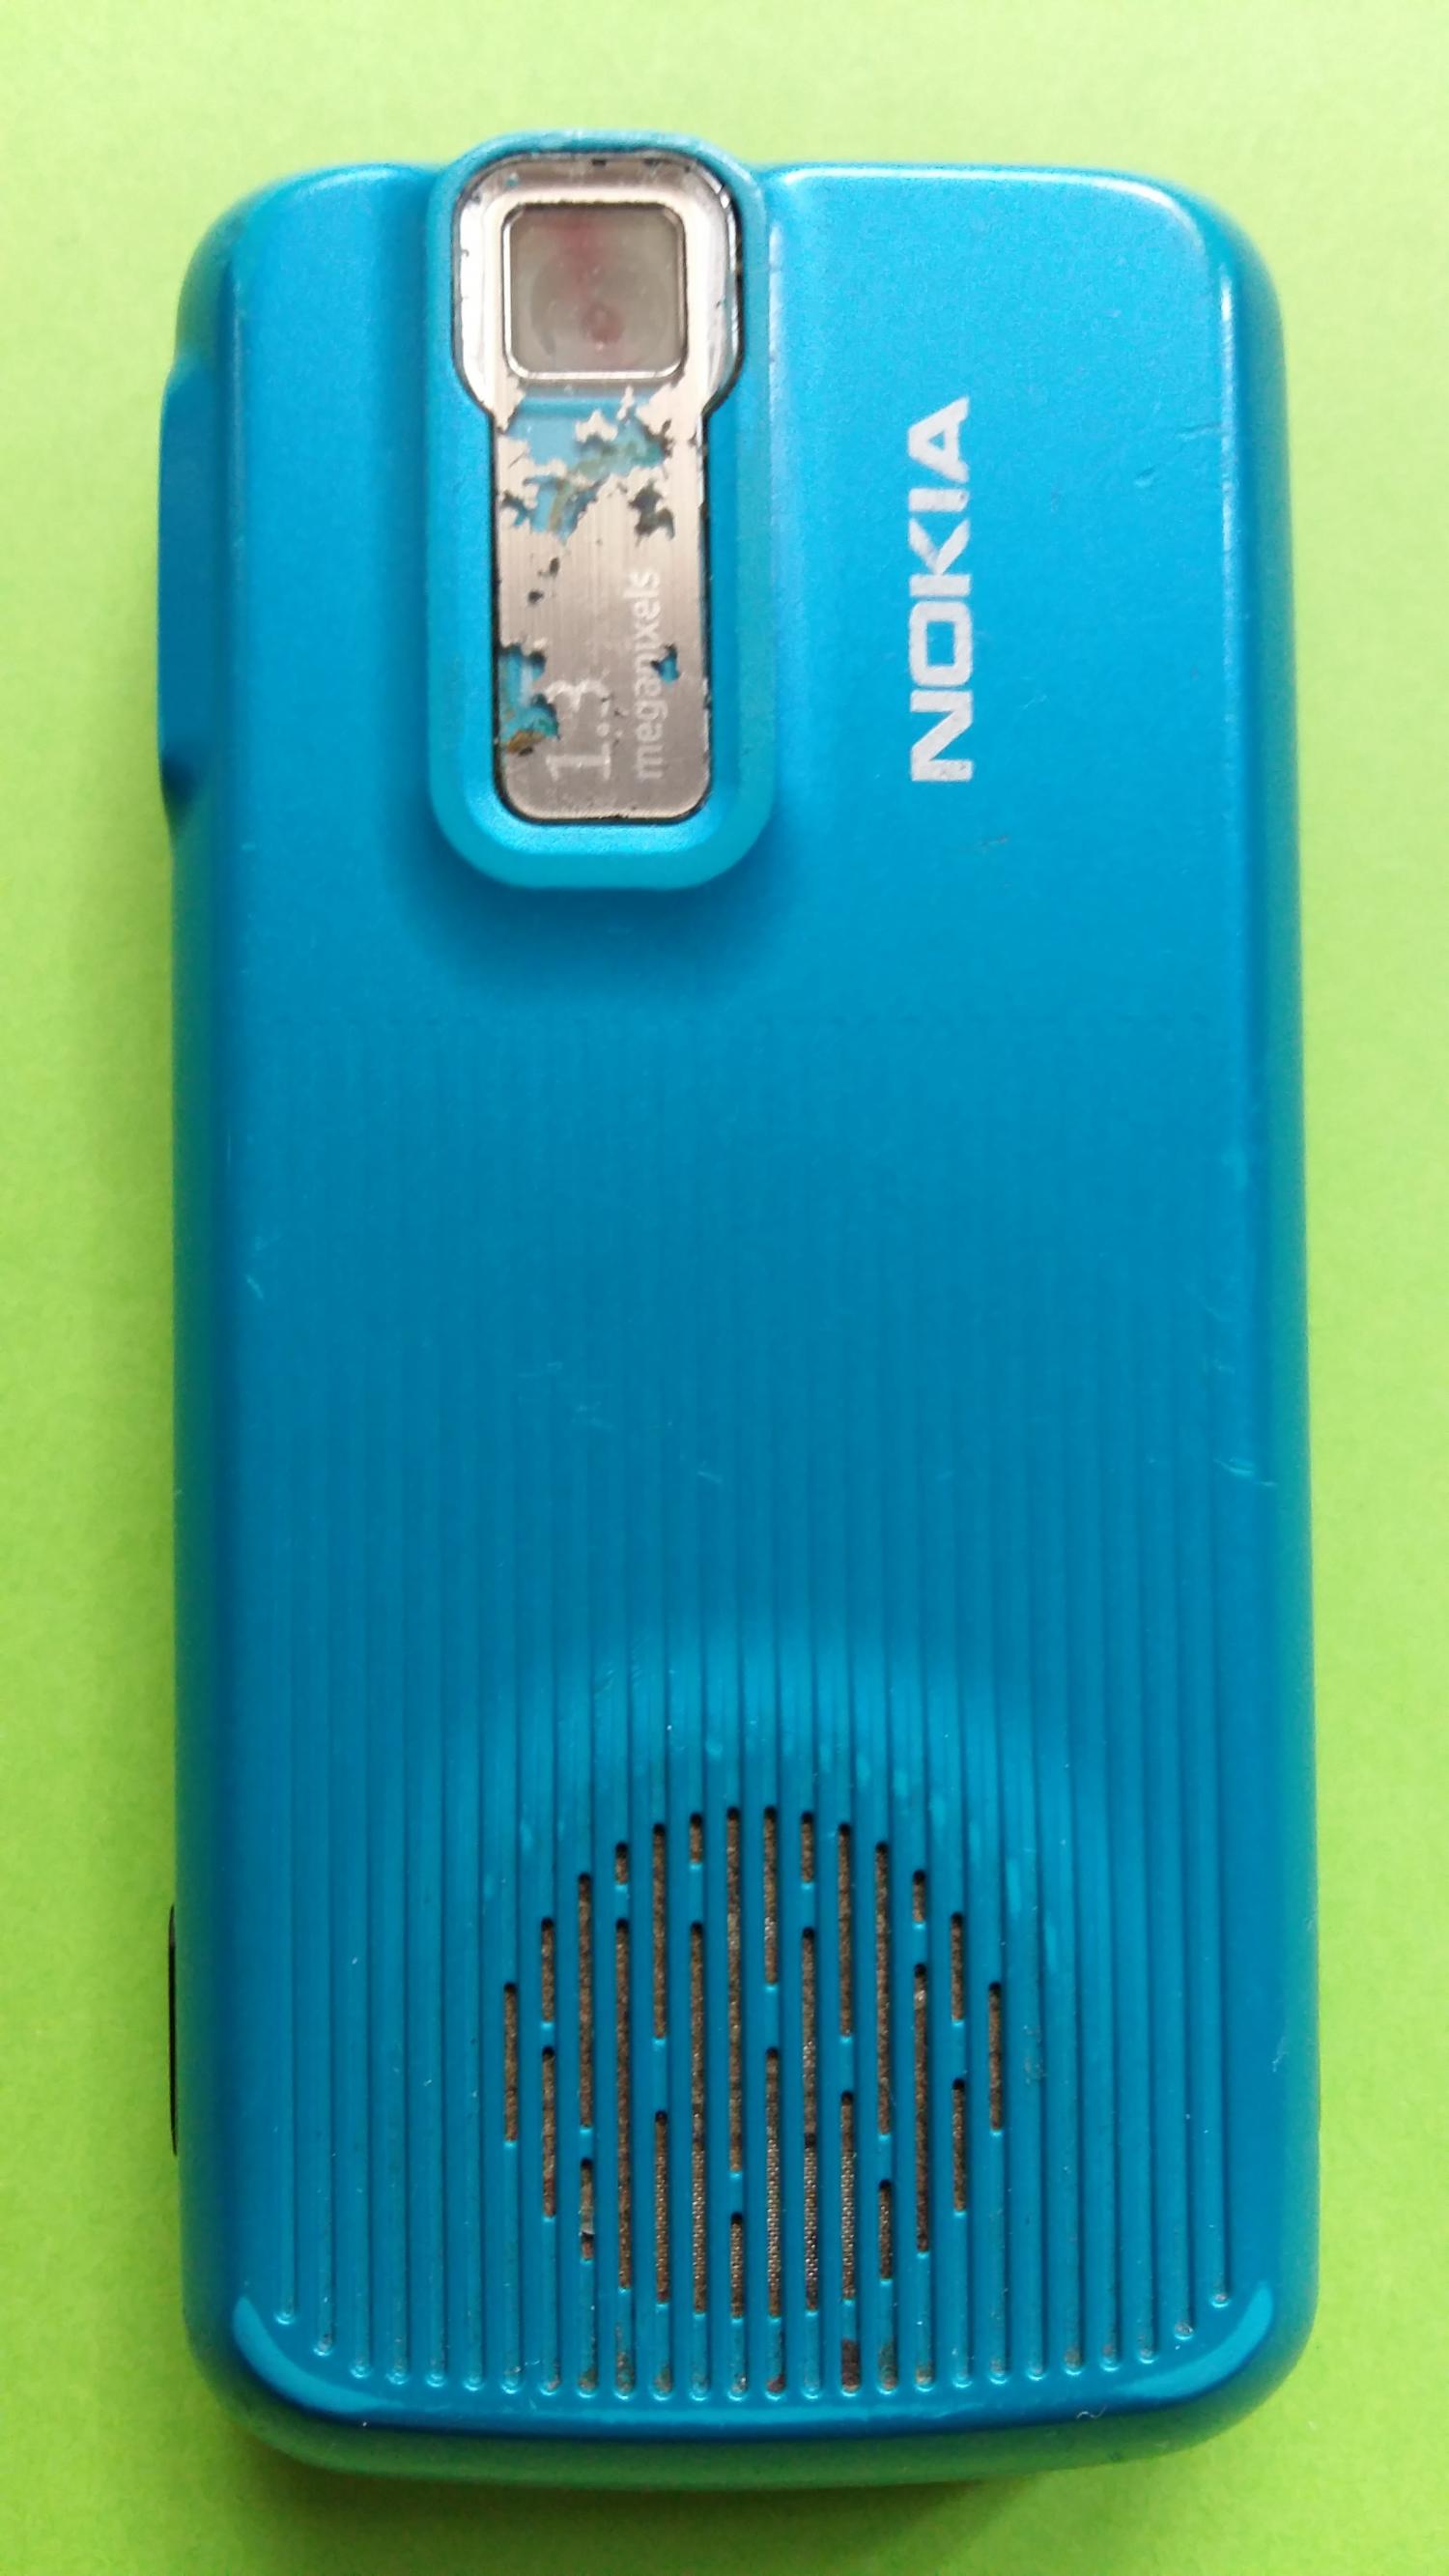 image-7321427-Nokia 7100S-2 Supernova (2)5.jpg